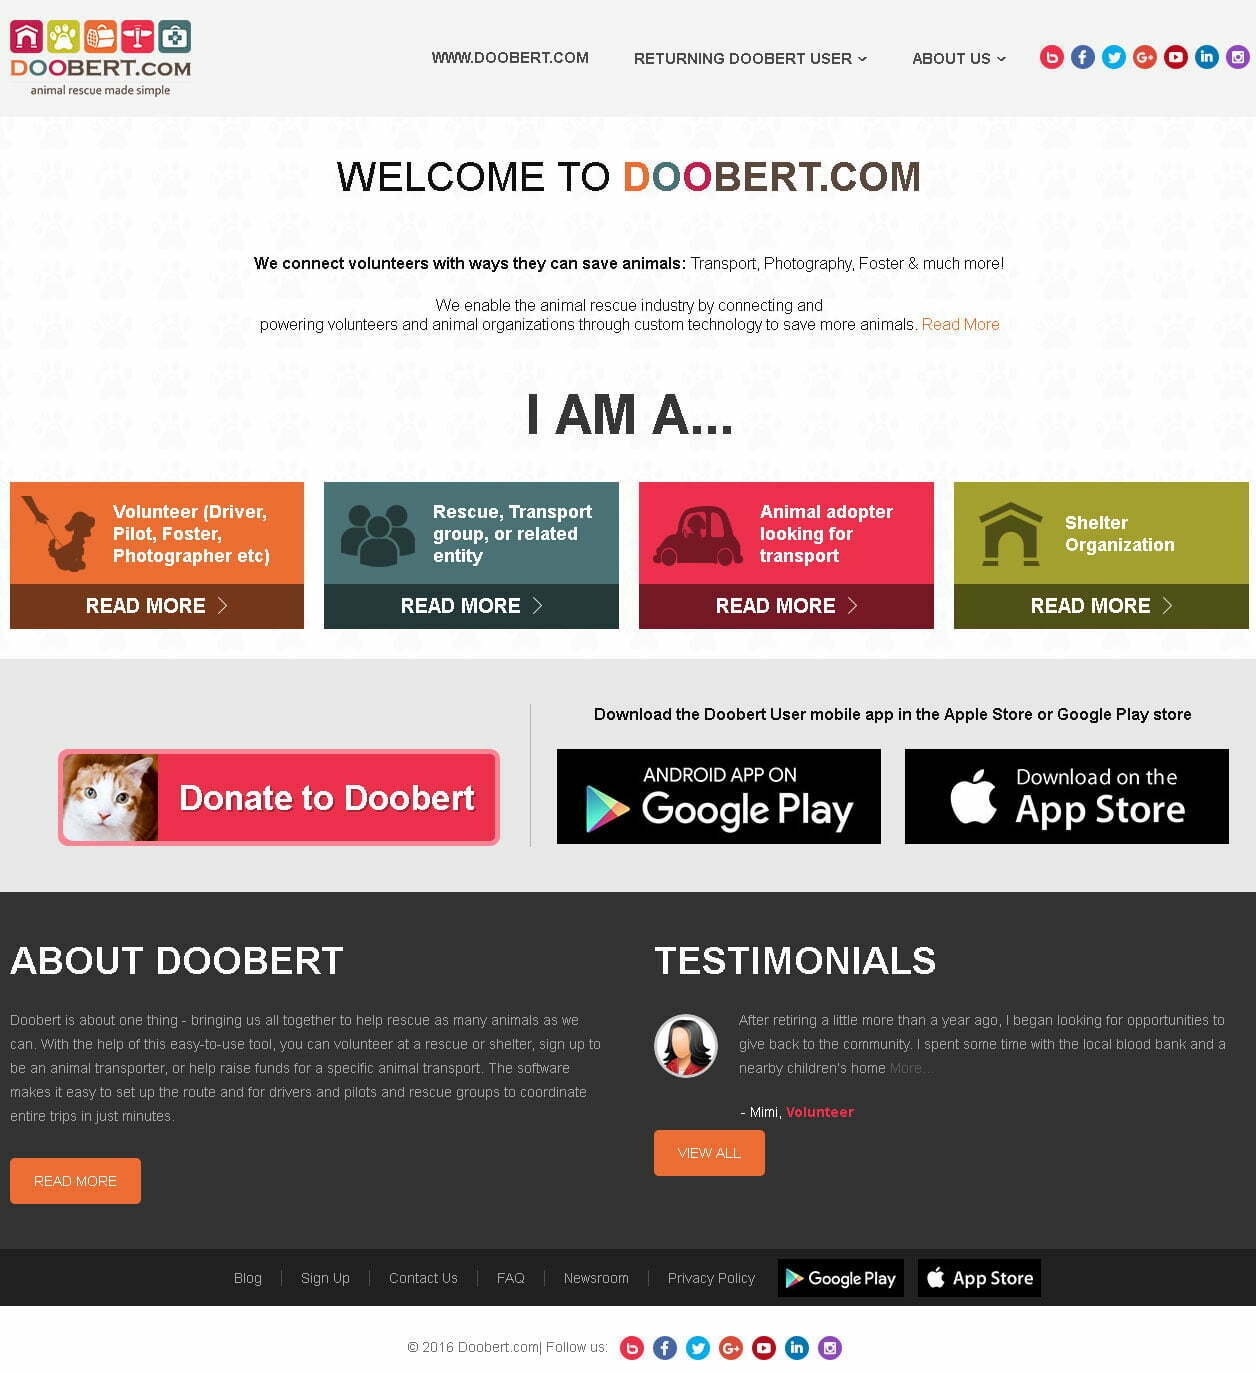 Doobert.com